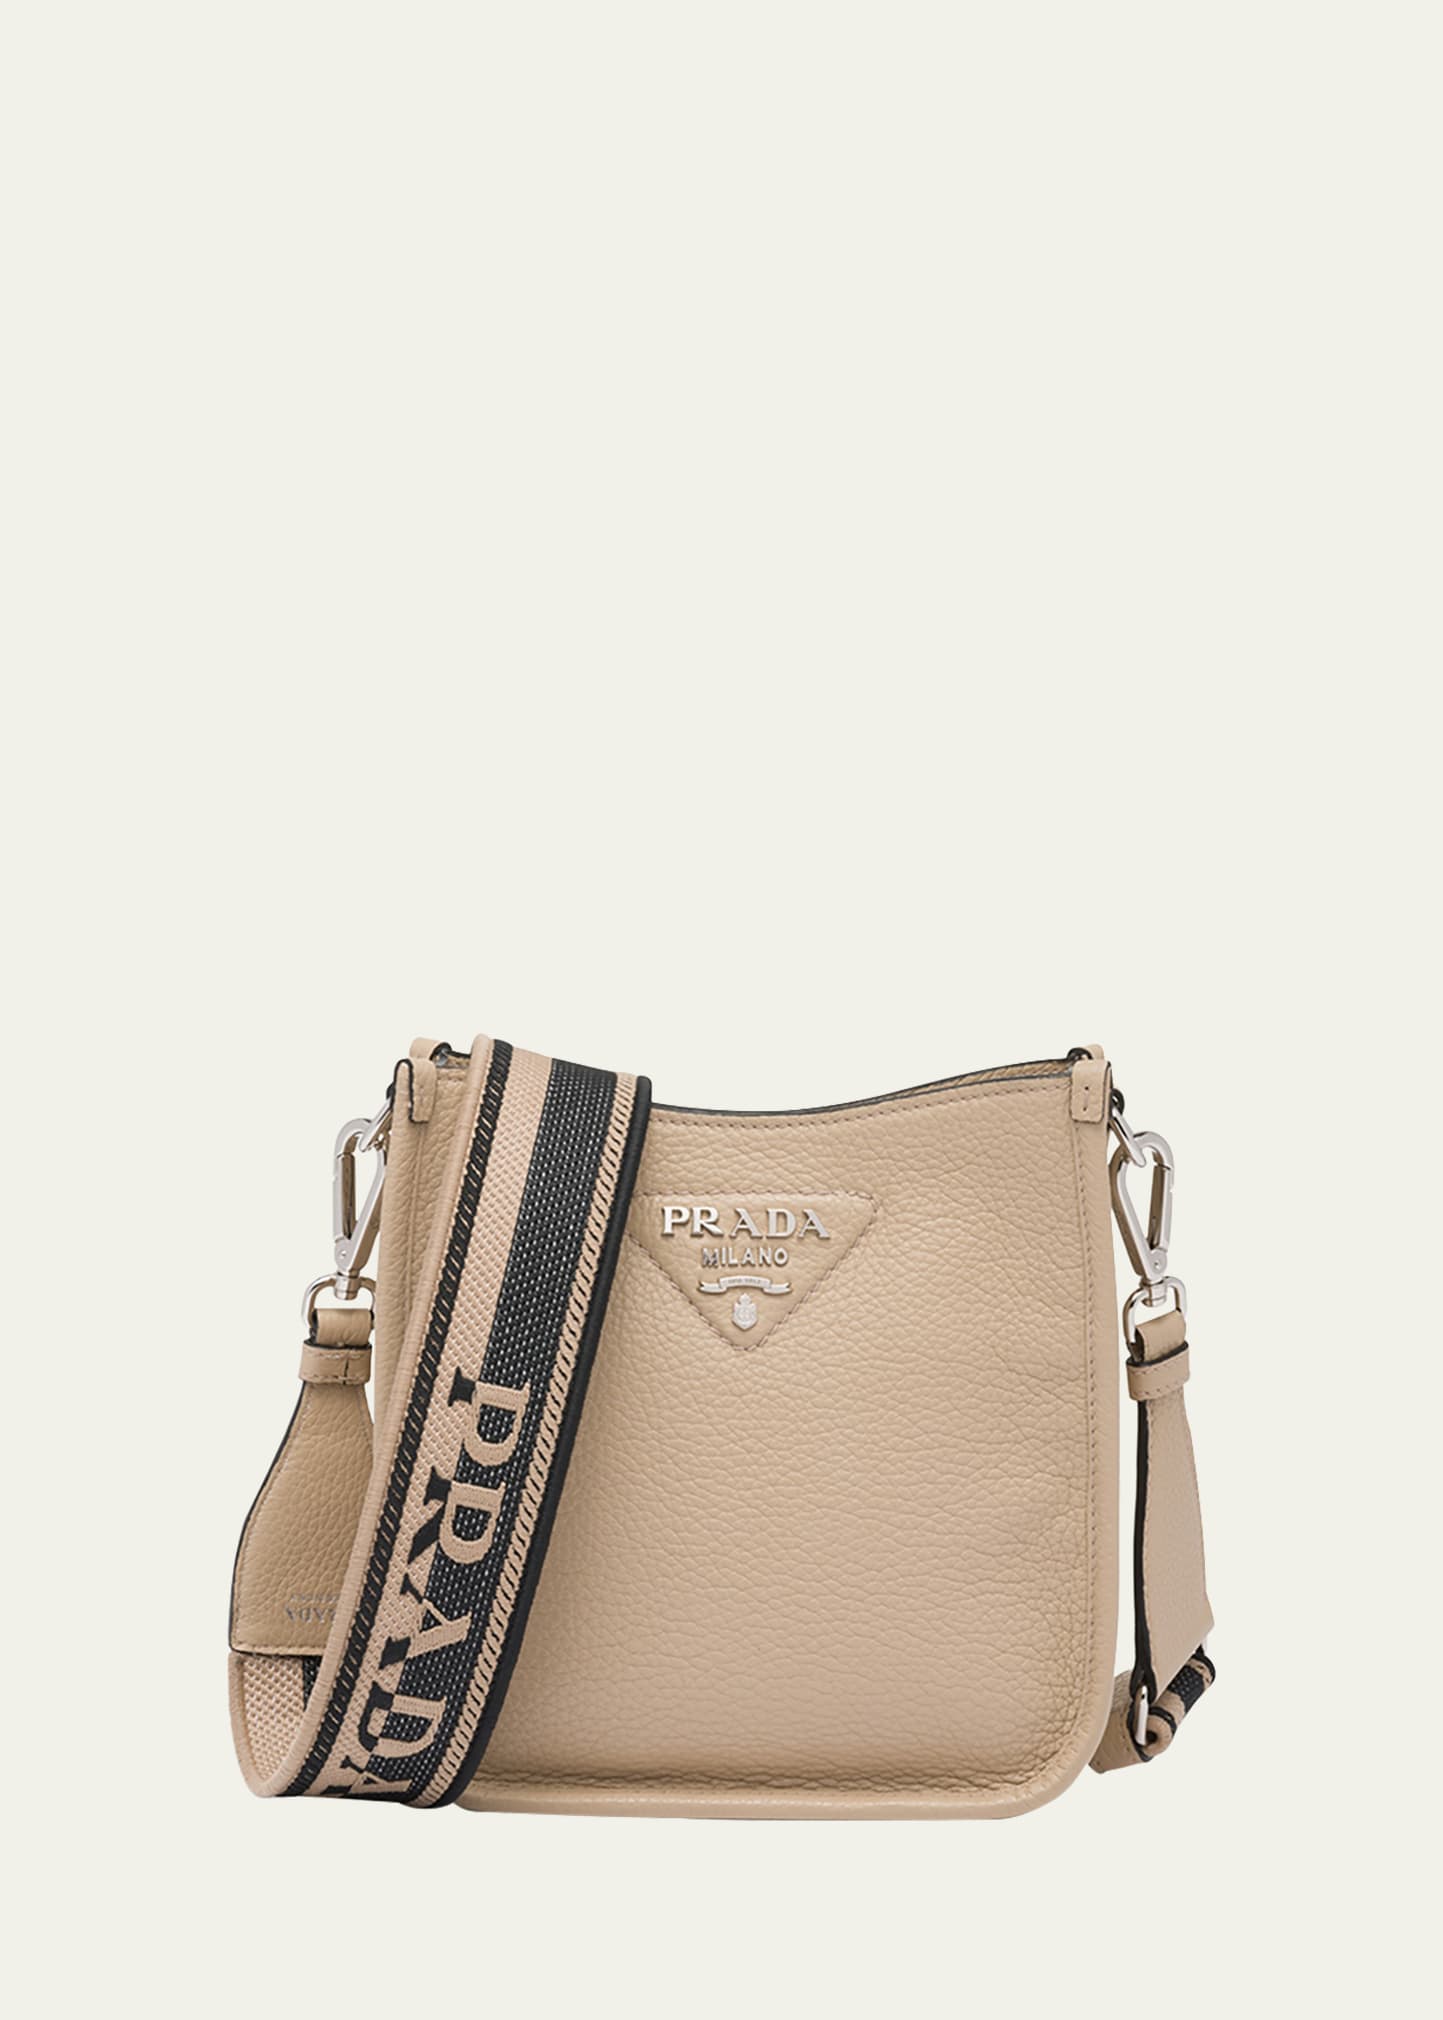 Prada Logo Leather Shoulder Bag In F02yp Sabbia N